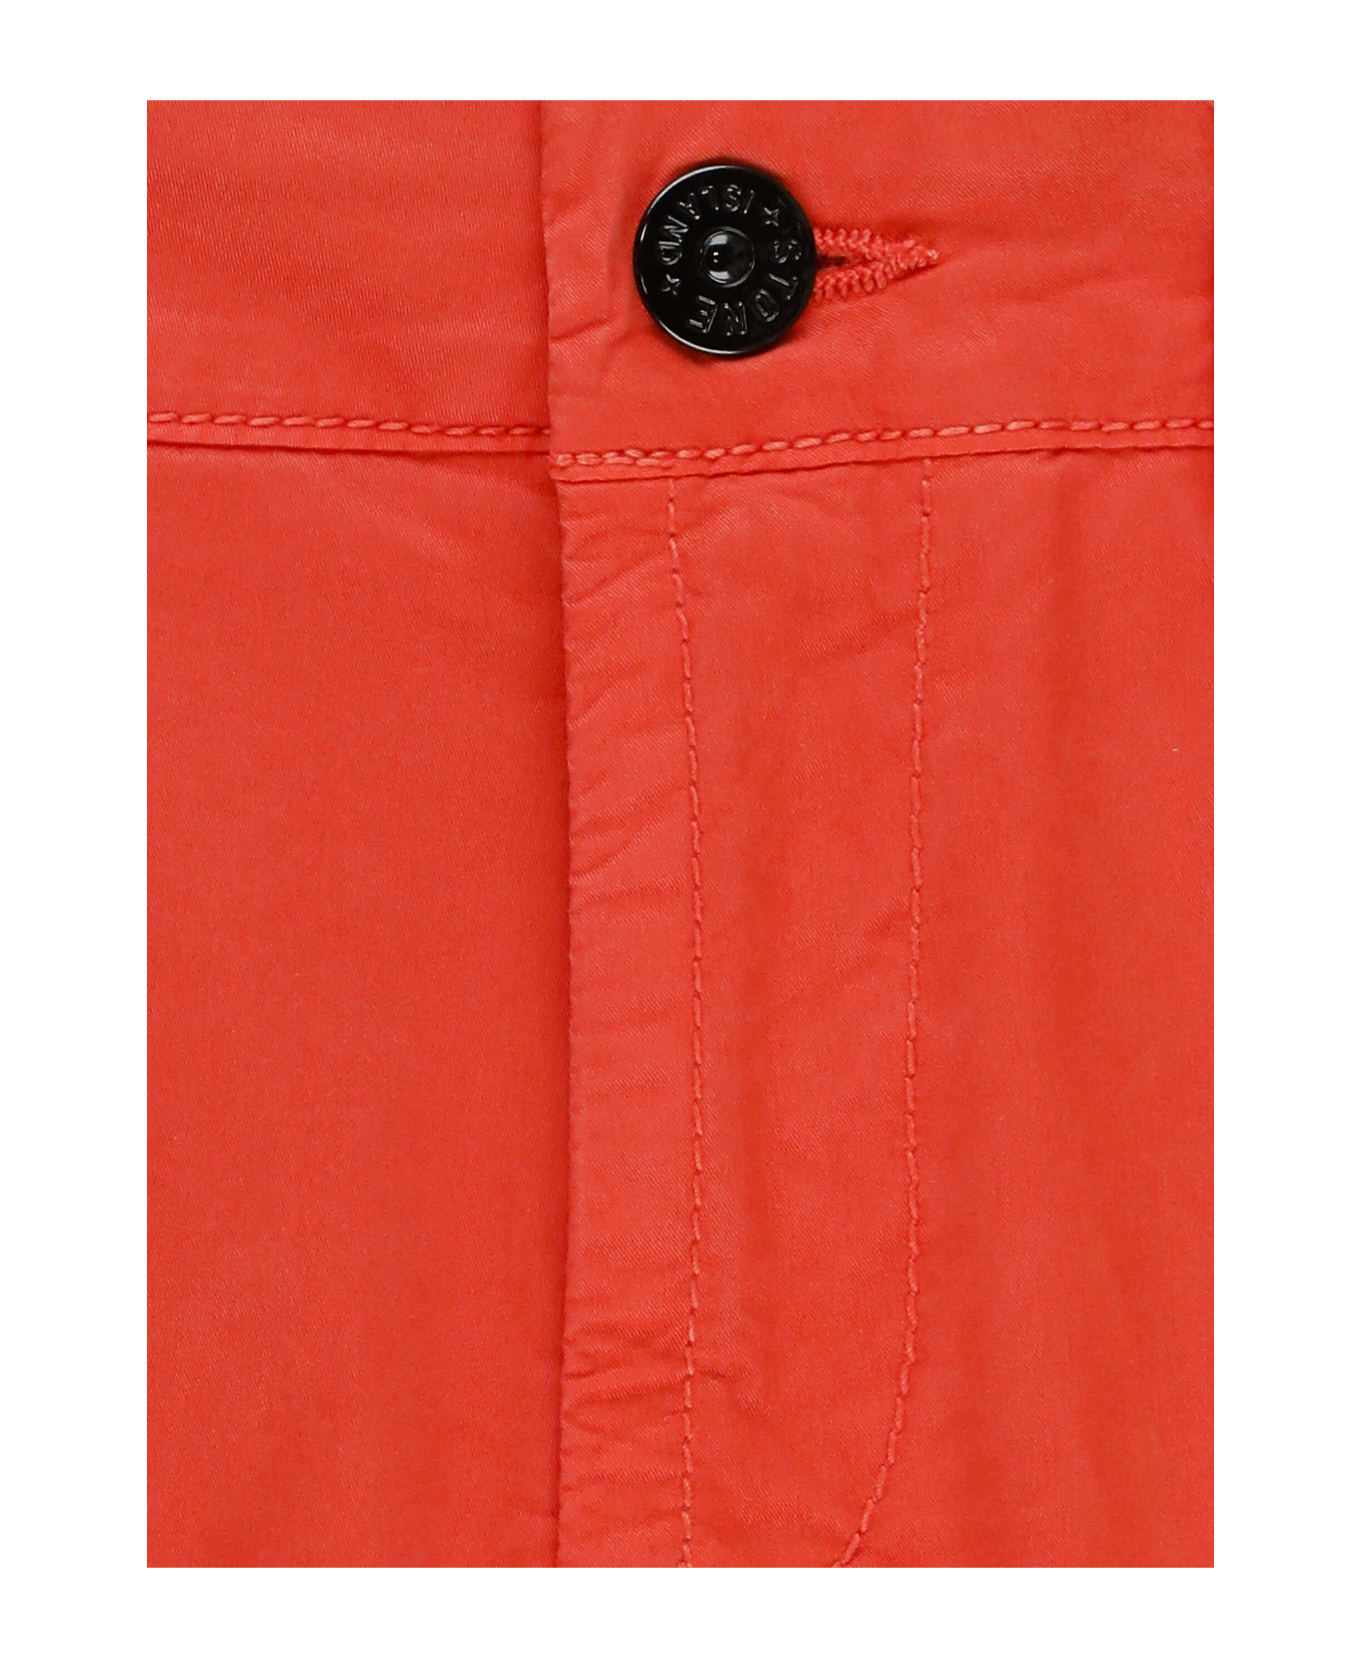 Stone Island Cotton Bermuda Shorts - Orange